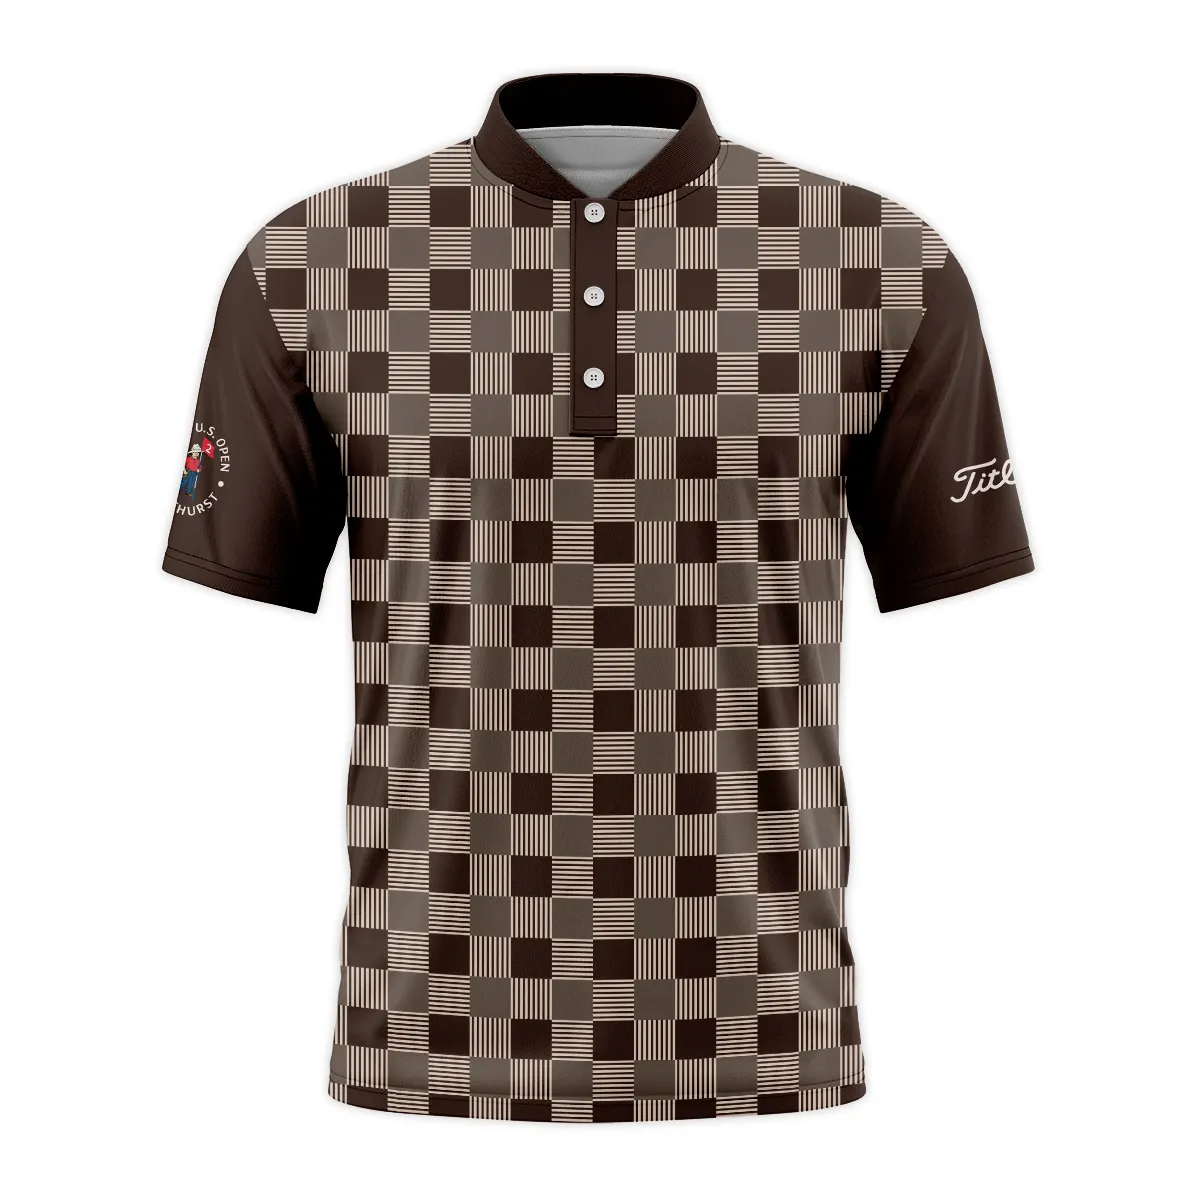 Golf Brown Square Pattern 124th U.S. Open Pinehurst Titleist Hoodie Shirt Style Classic